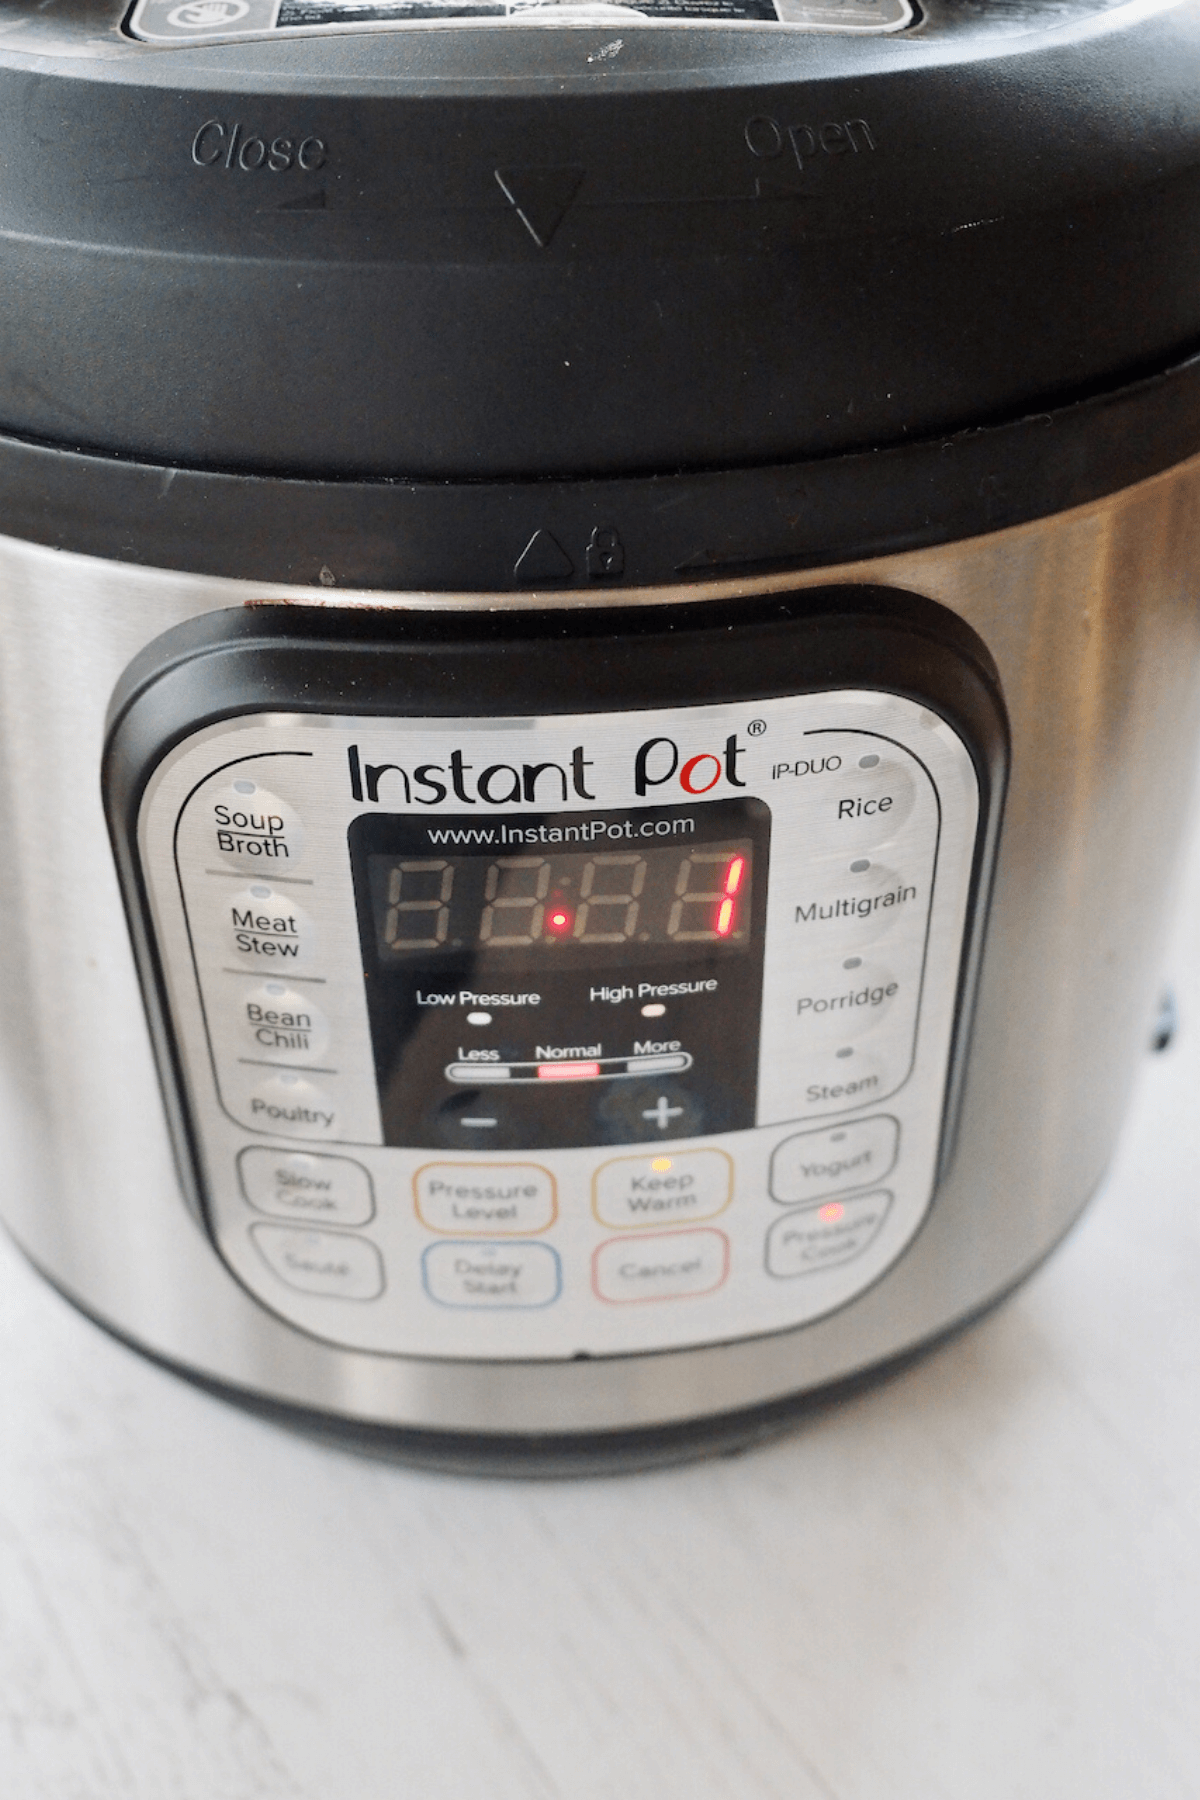 Instant Pot set to 1 minute.